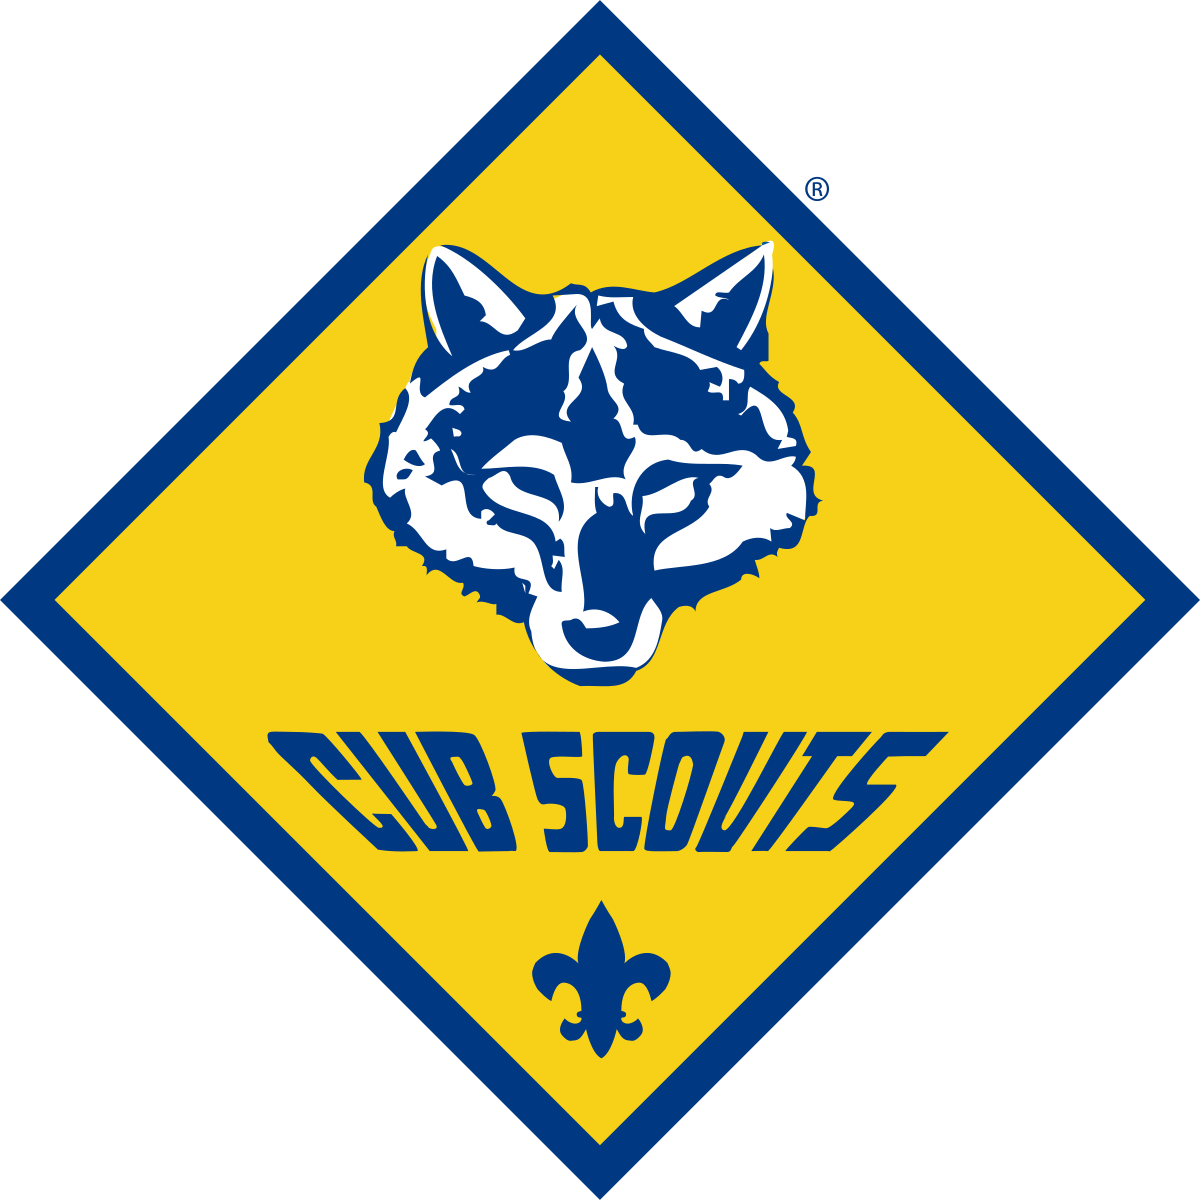 Cub Scouting (Boy Scouts of America) - Wikipedia